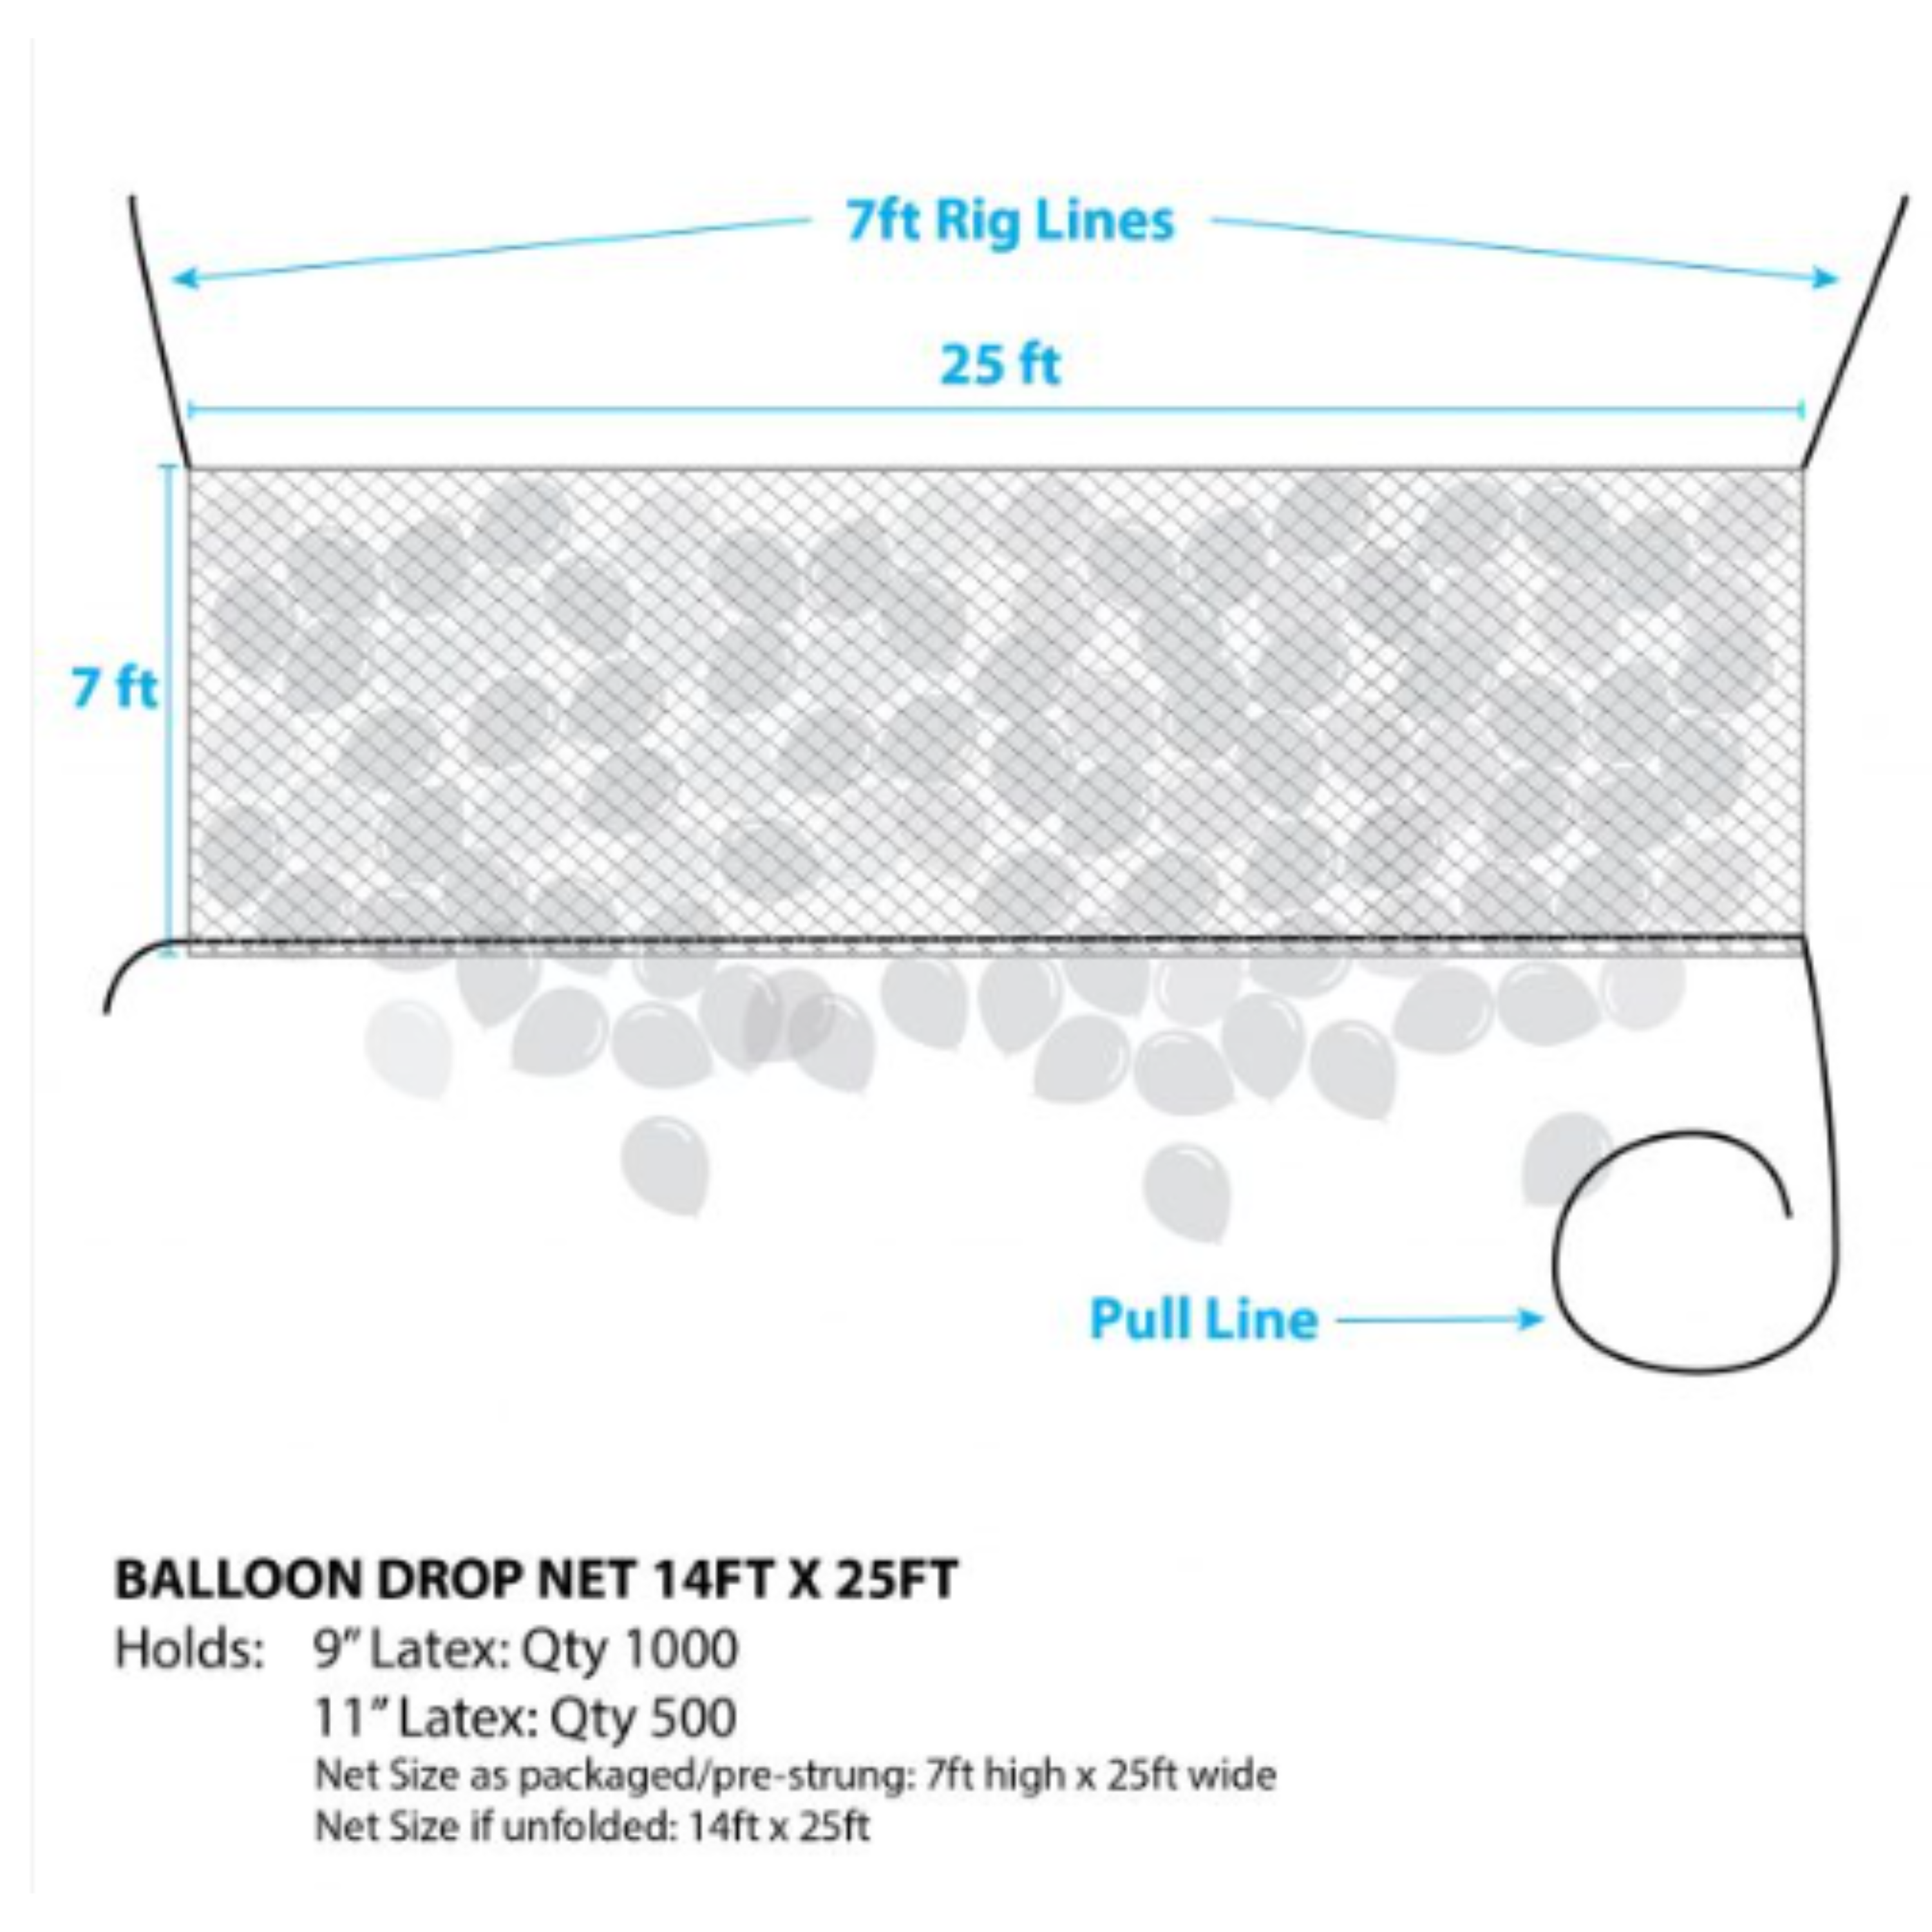 Build-A-Net Balloon Drop Net | Build Your Own Drop Net! - 2 Sizes!